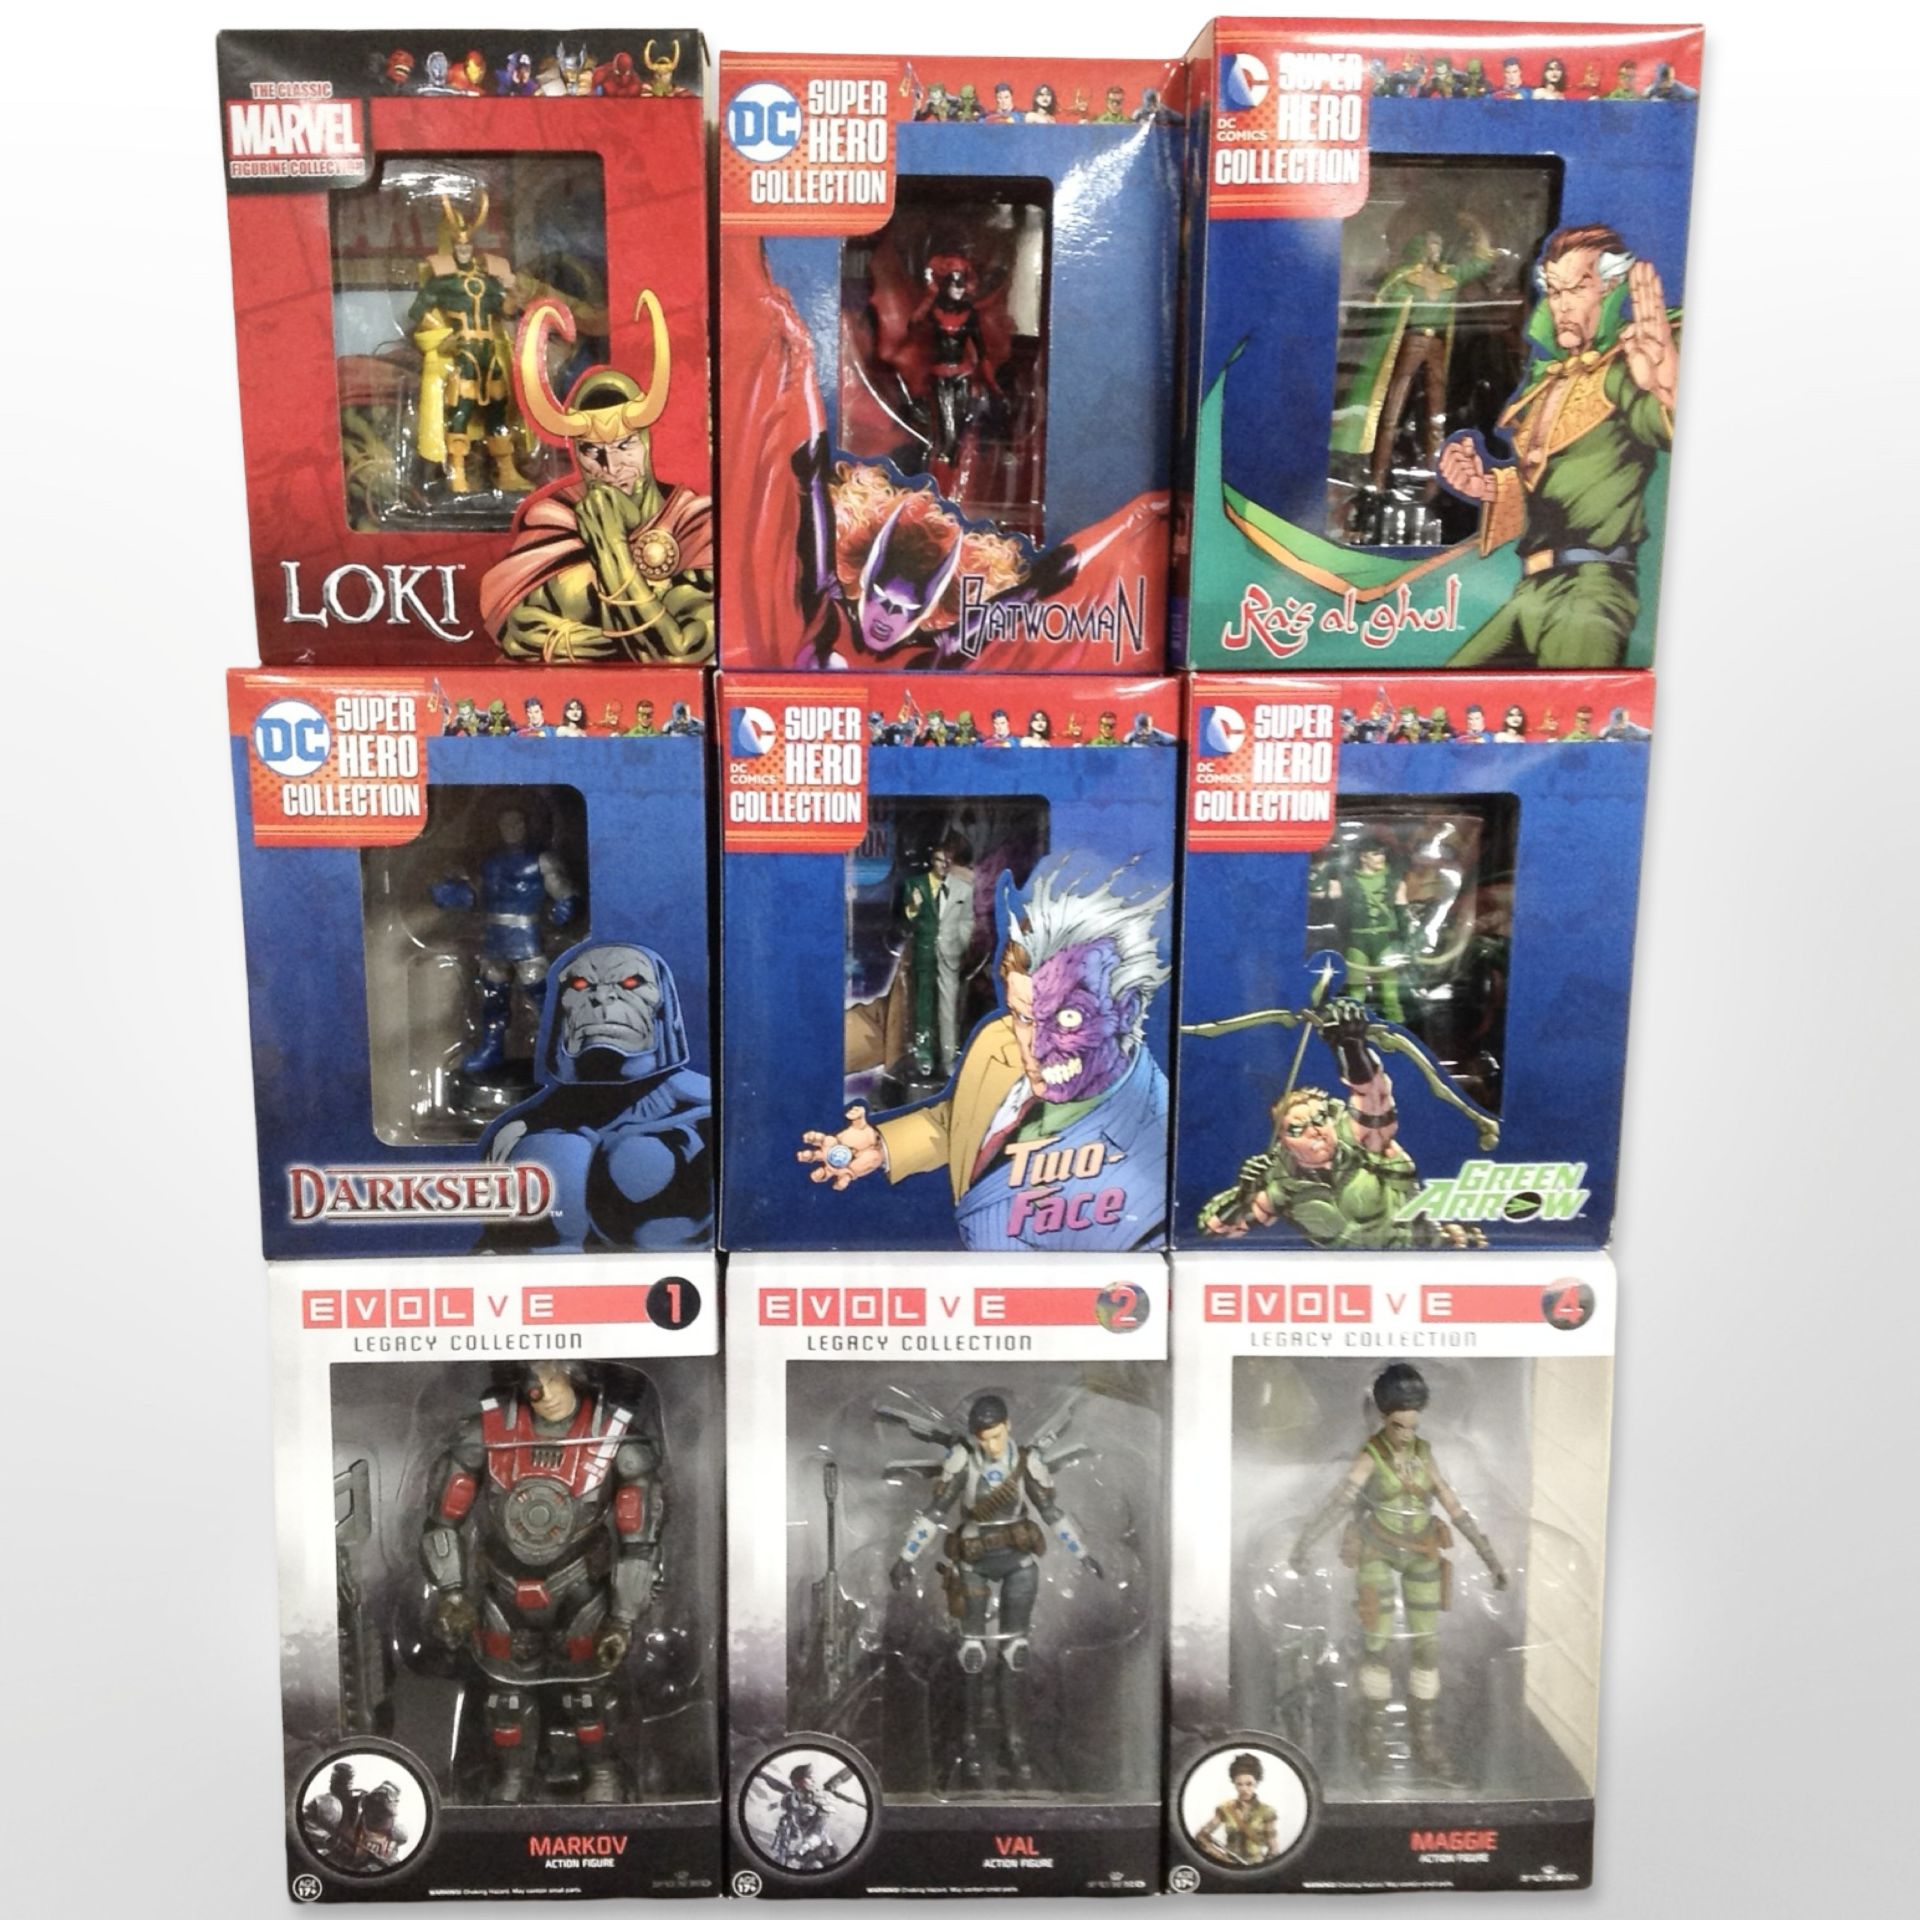 Seven DC Comics superhero figurines, a further Marvel figurine, and a Funko Evolve figurine,